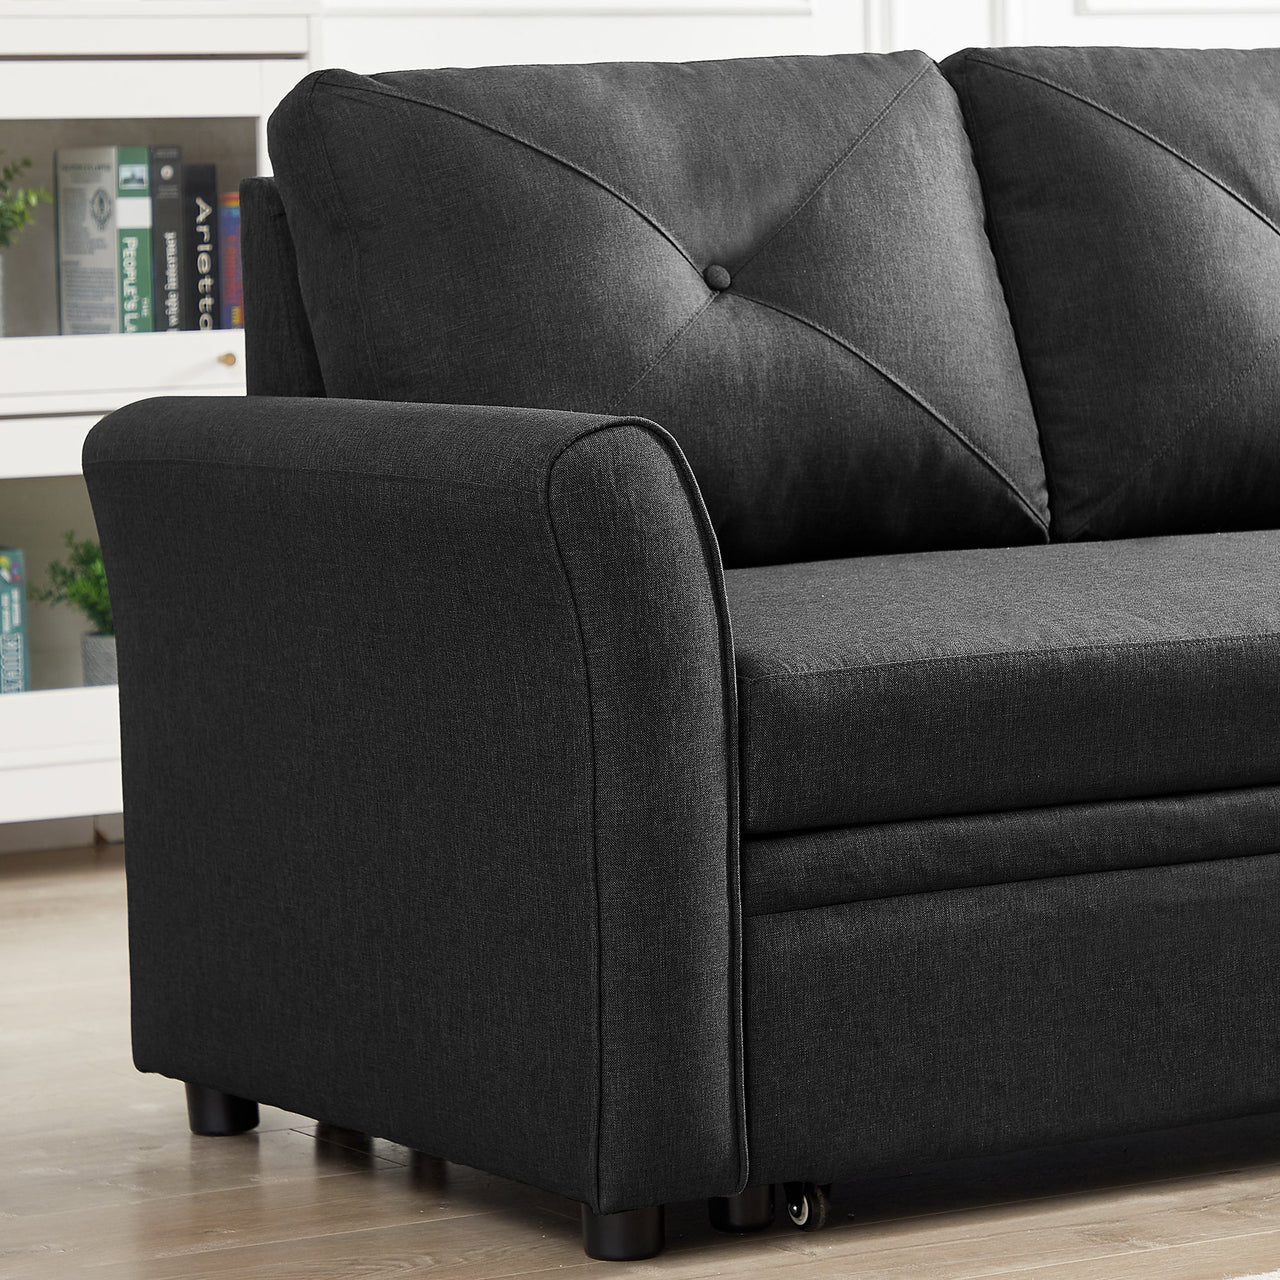 Small L - shaped Sectional Sofa - Casatrail.com